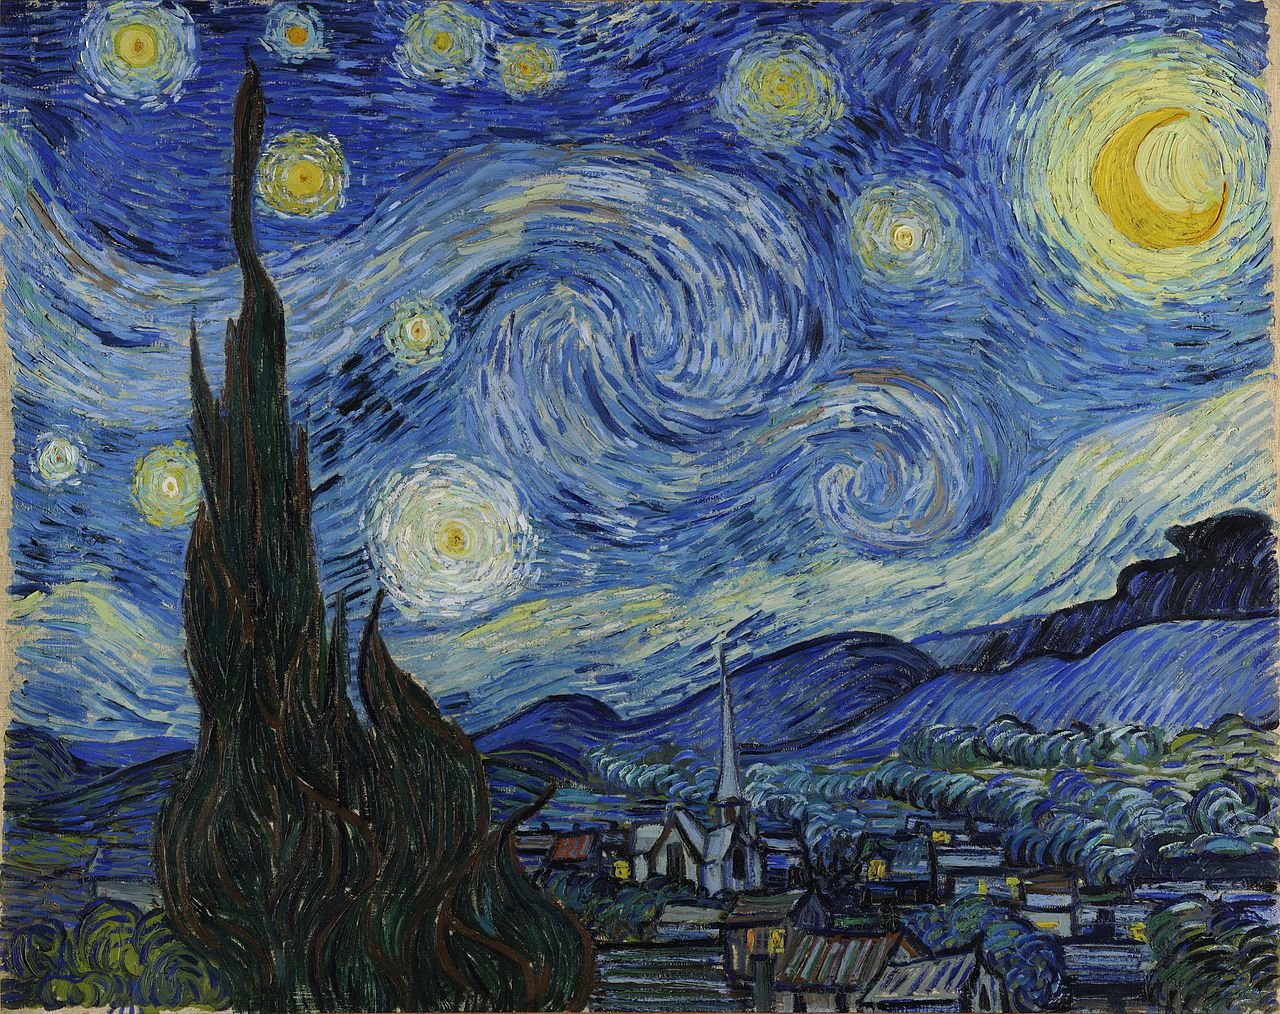 Van Gogh's painting, Starry Night